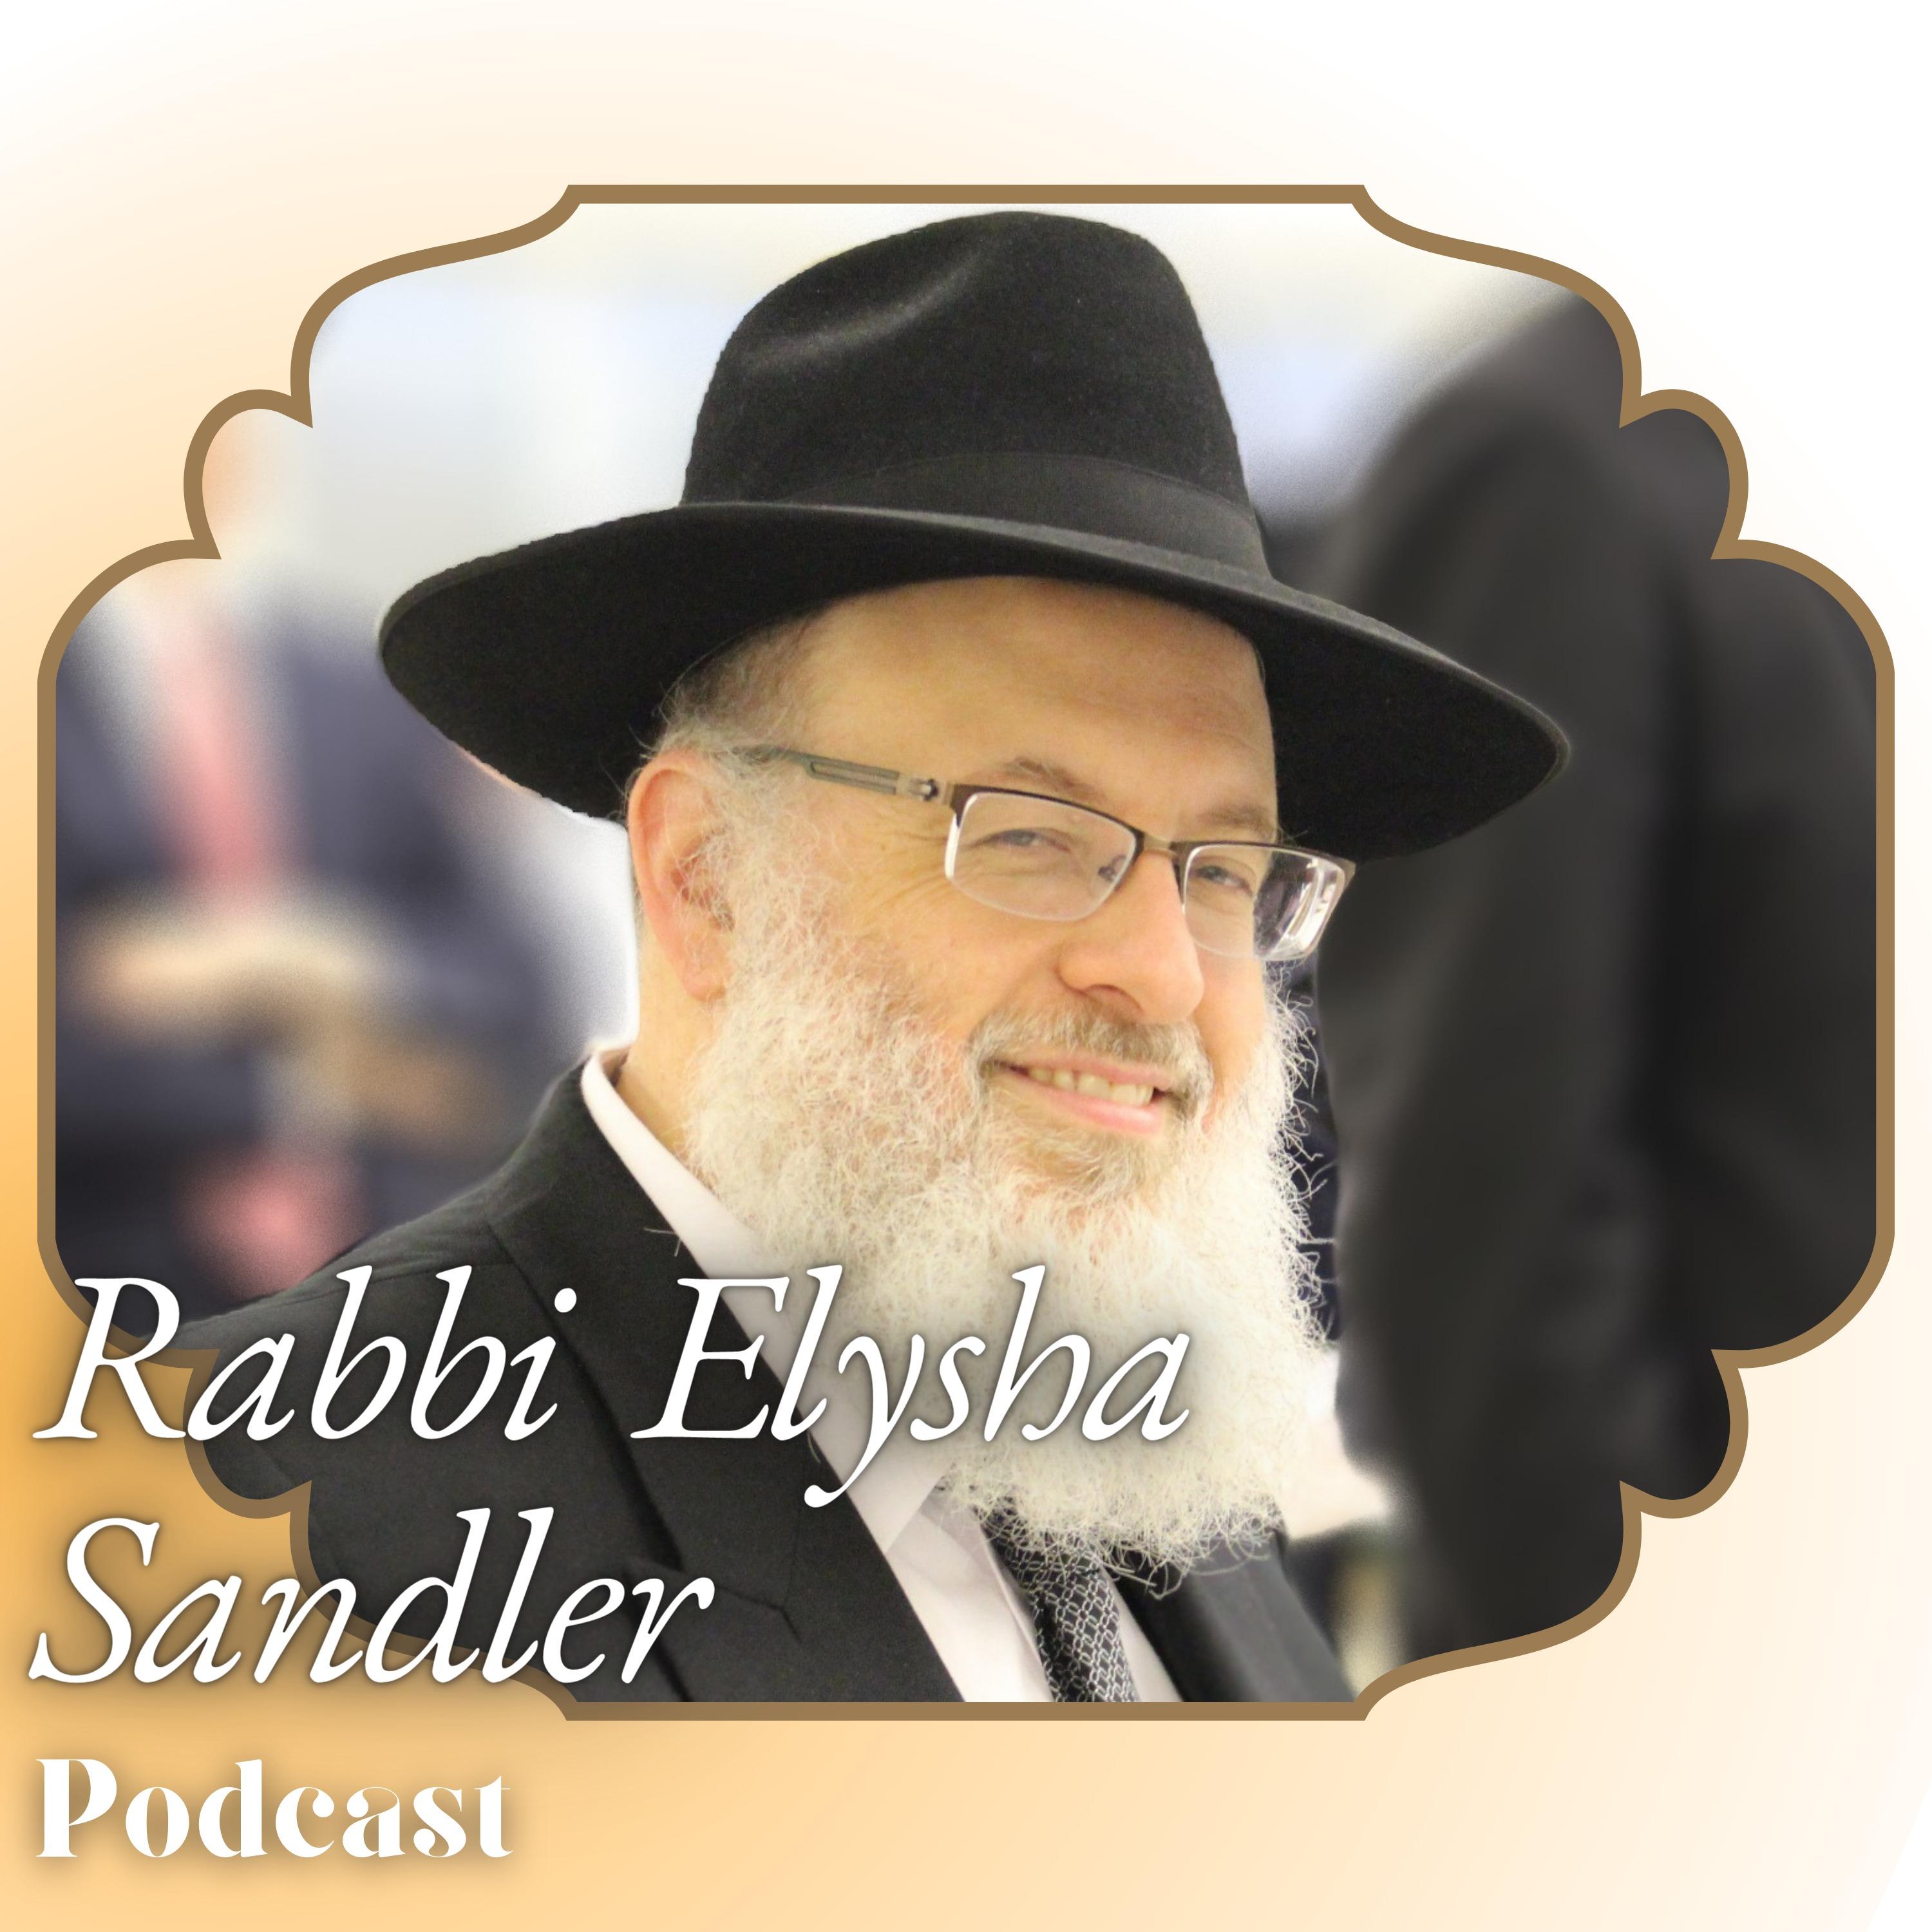 Rabbi Elysha Sandler